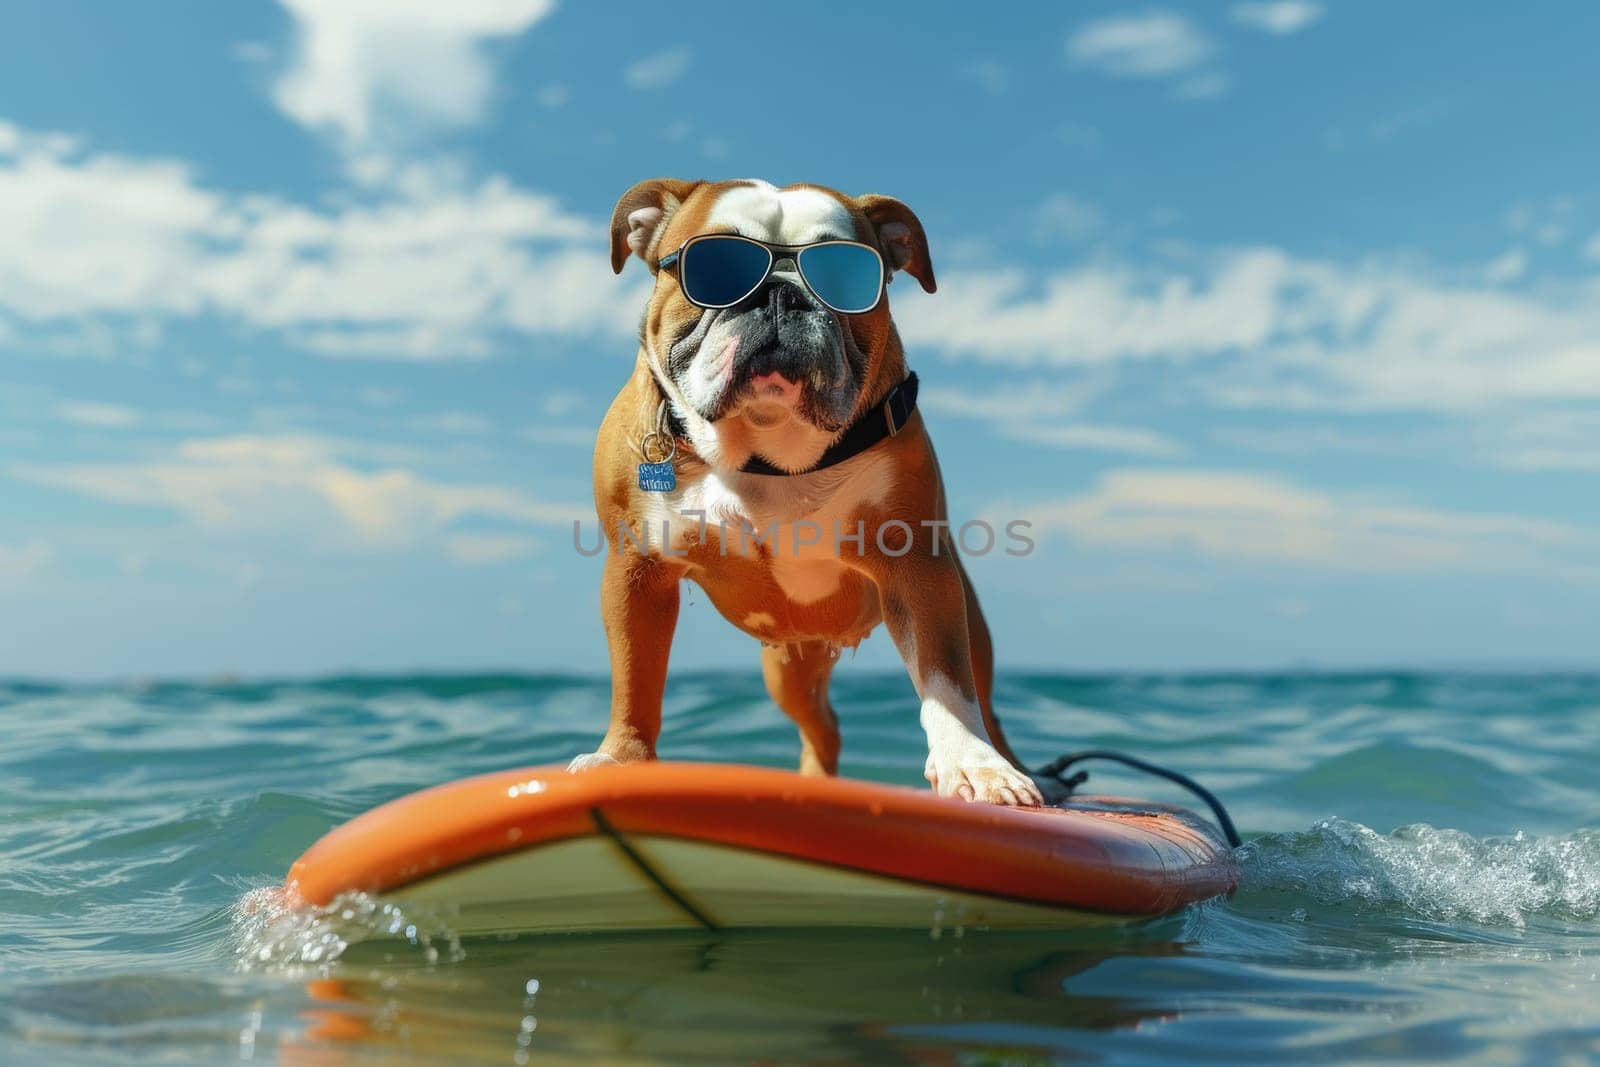 a dog wearing sunglasses riding a surfboard, summer activity.